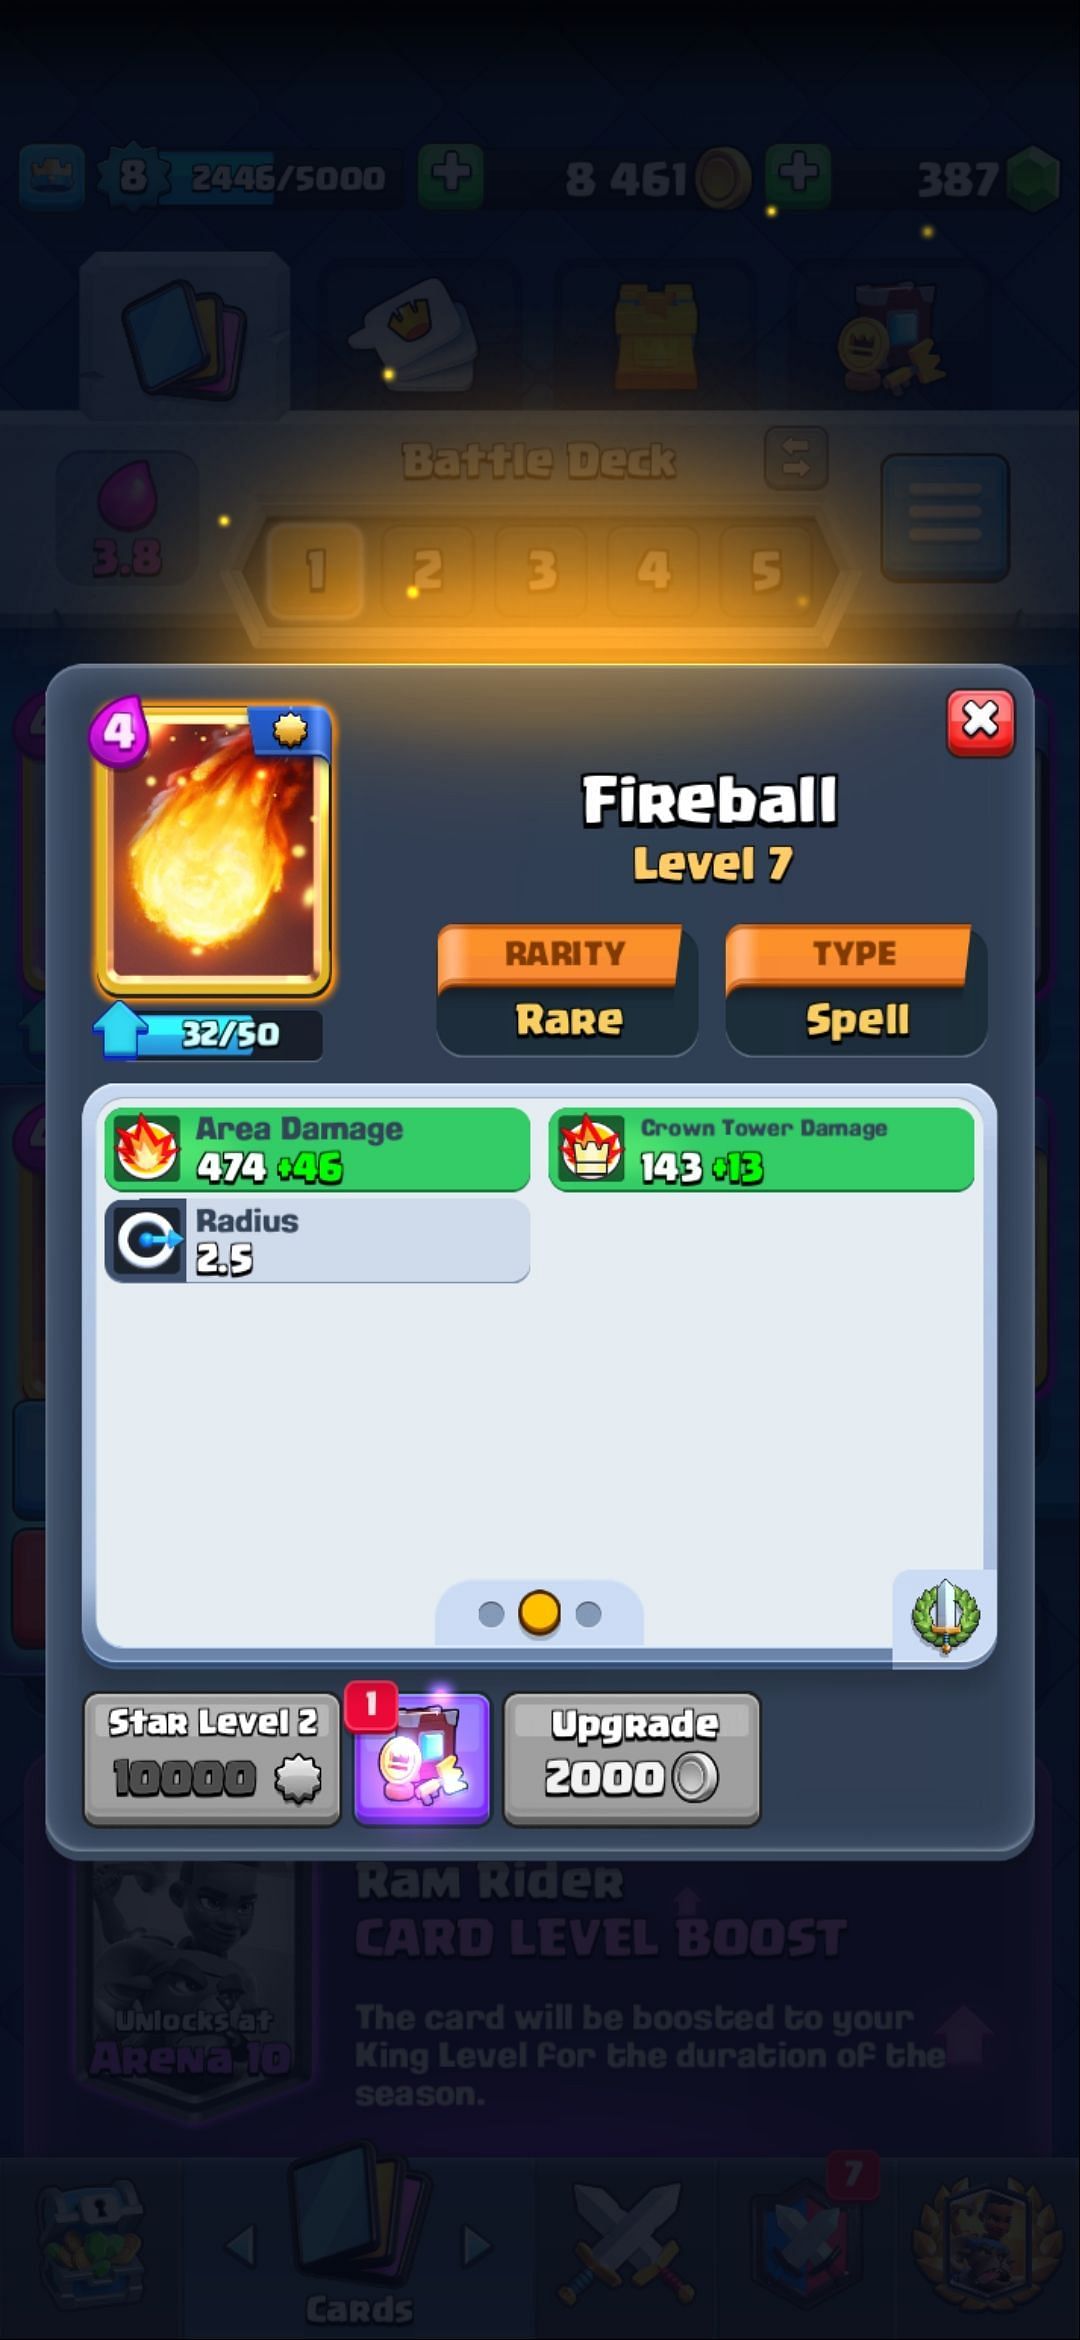 Fireball card (Image via Sportskeeda)